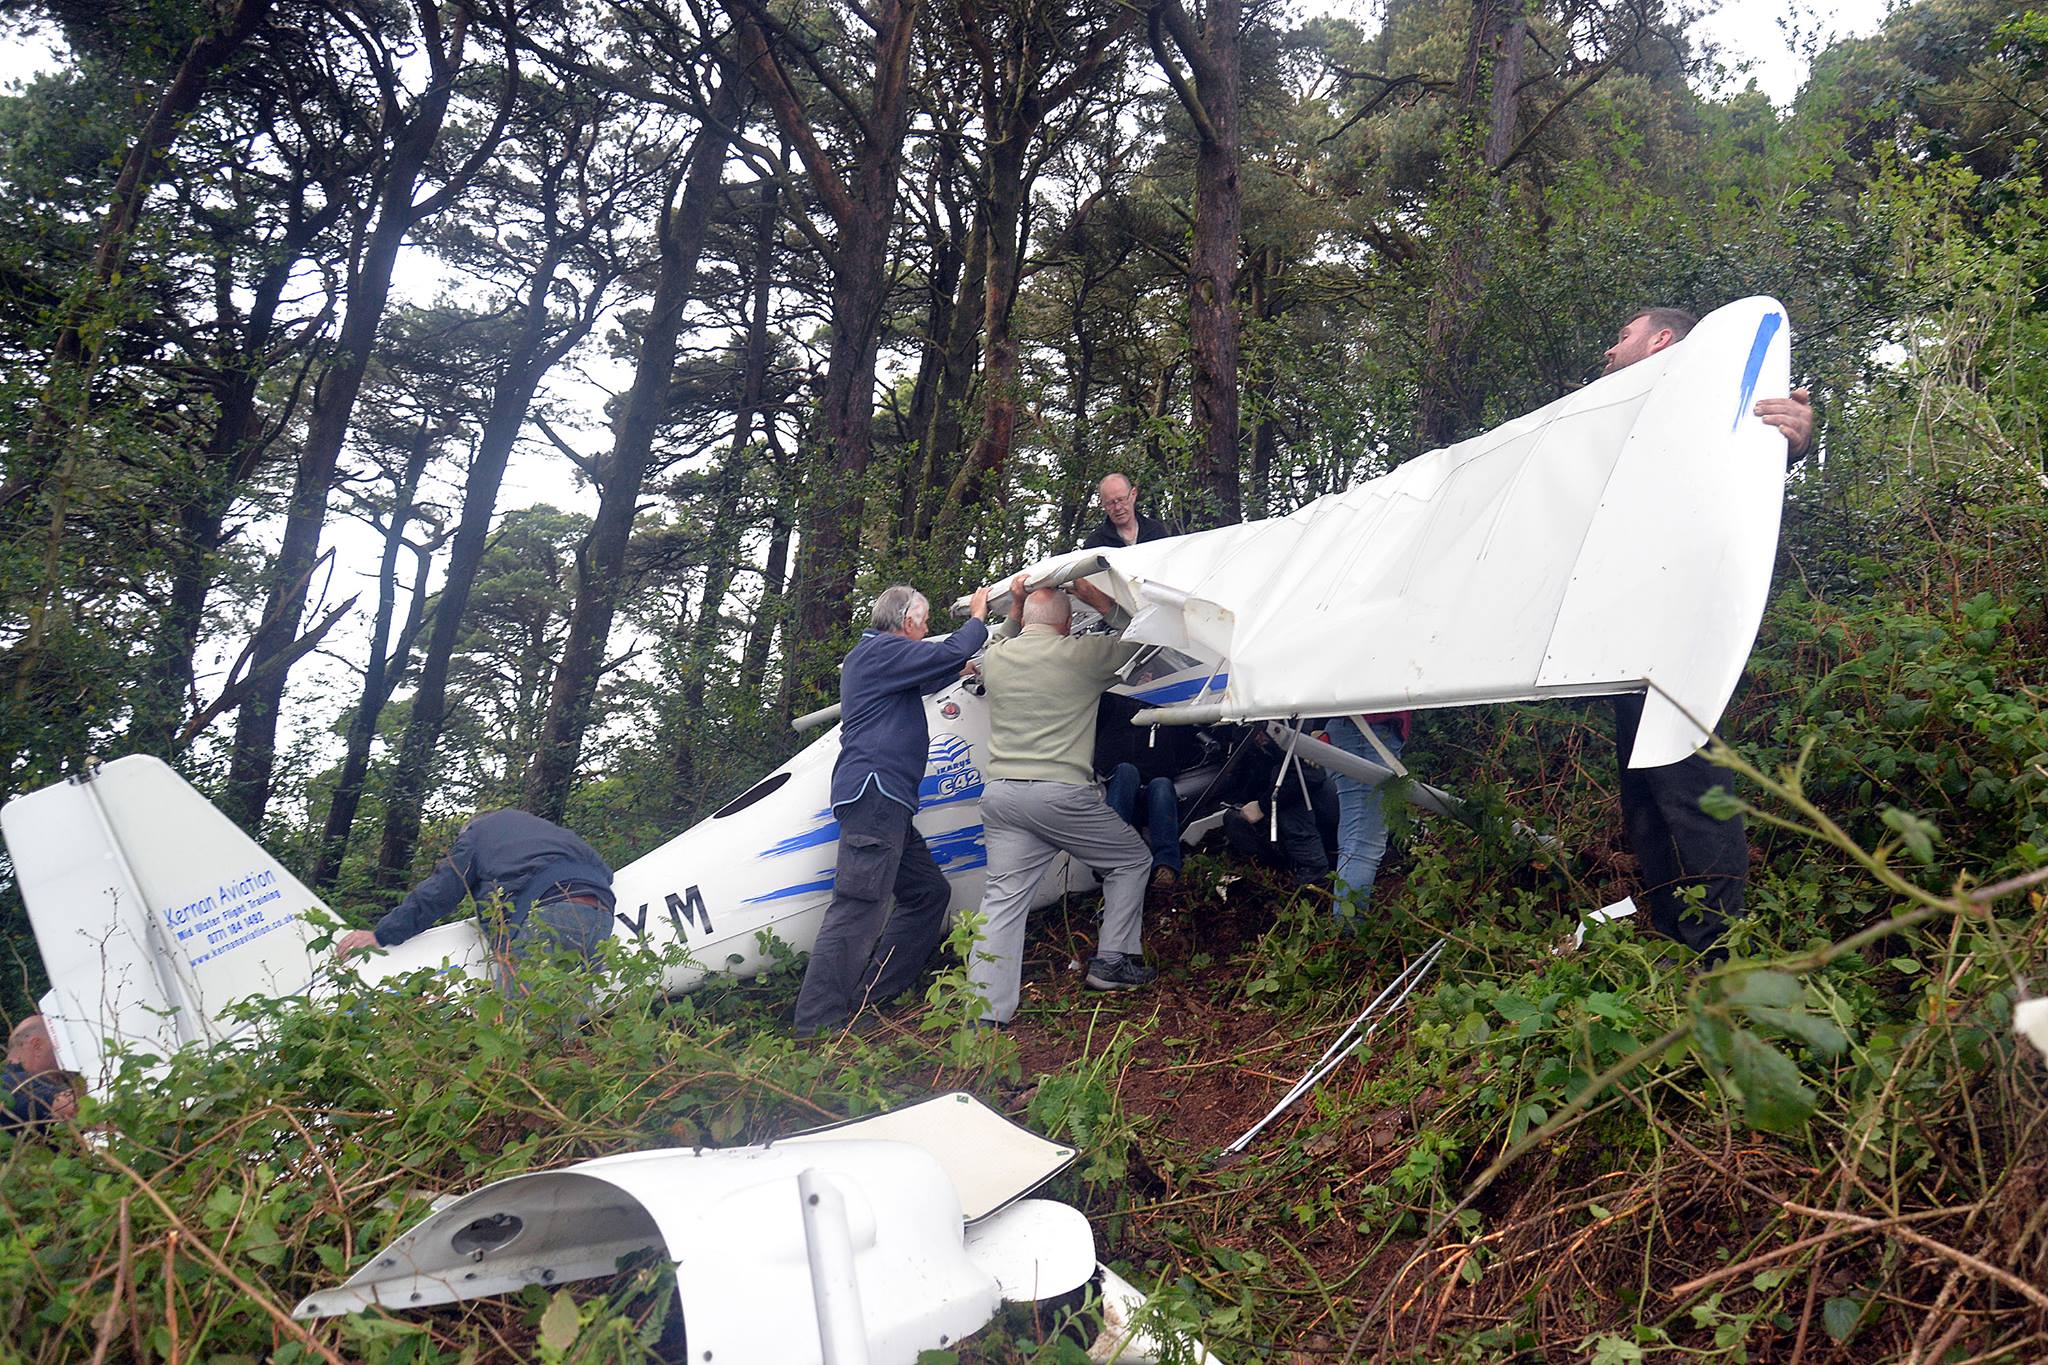 Plane crash in Castlewellan